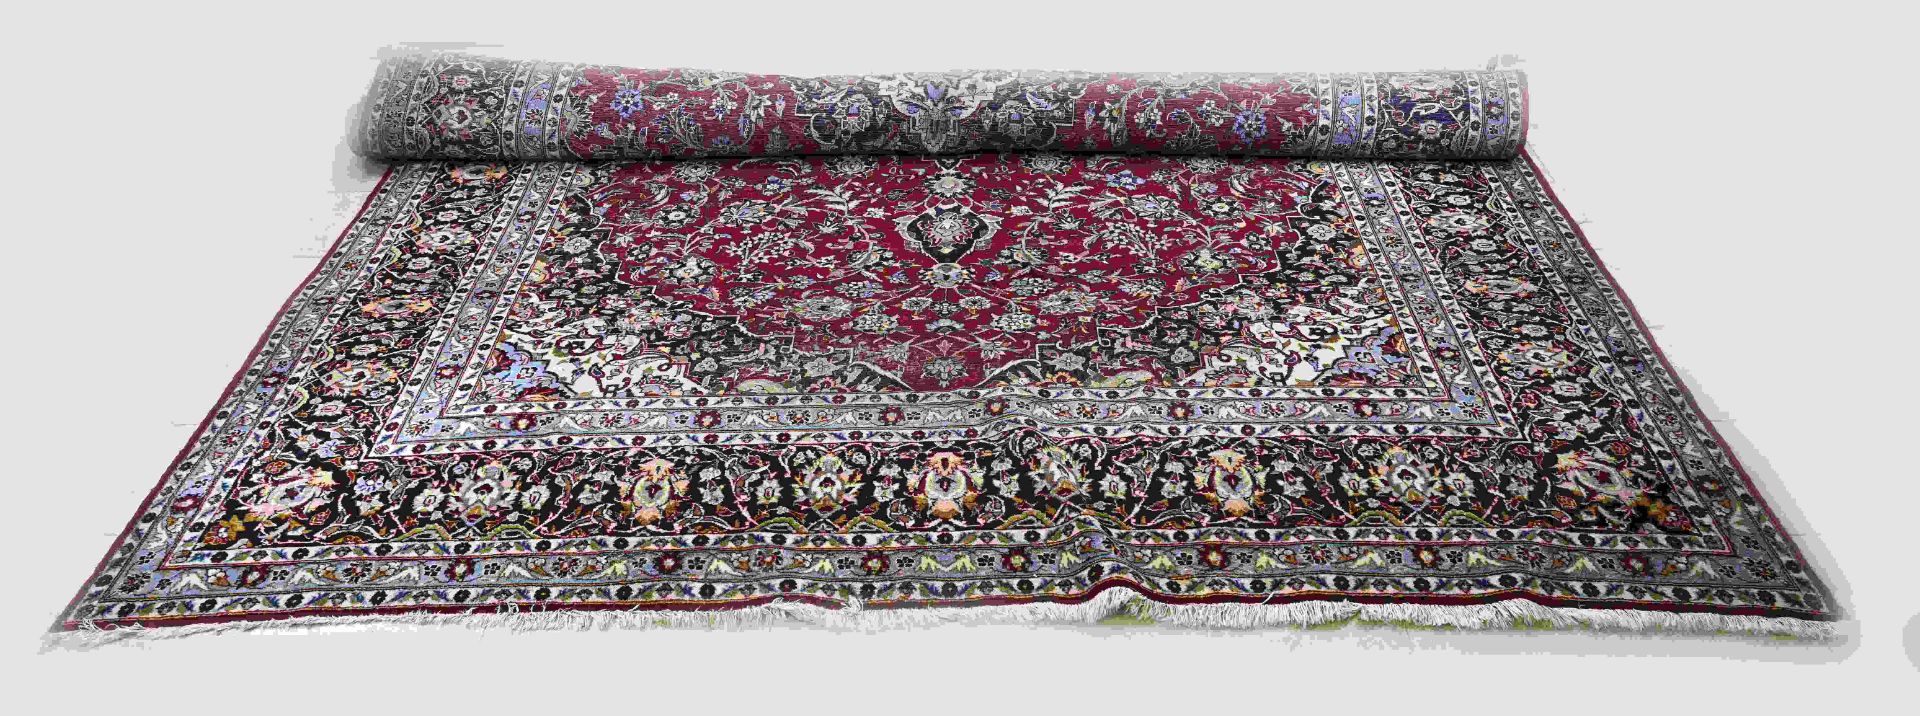 Large Persian rug, 300 x 400 cm.